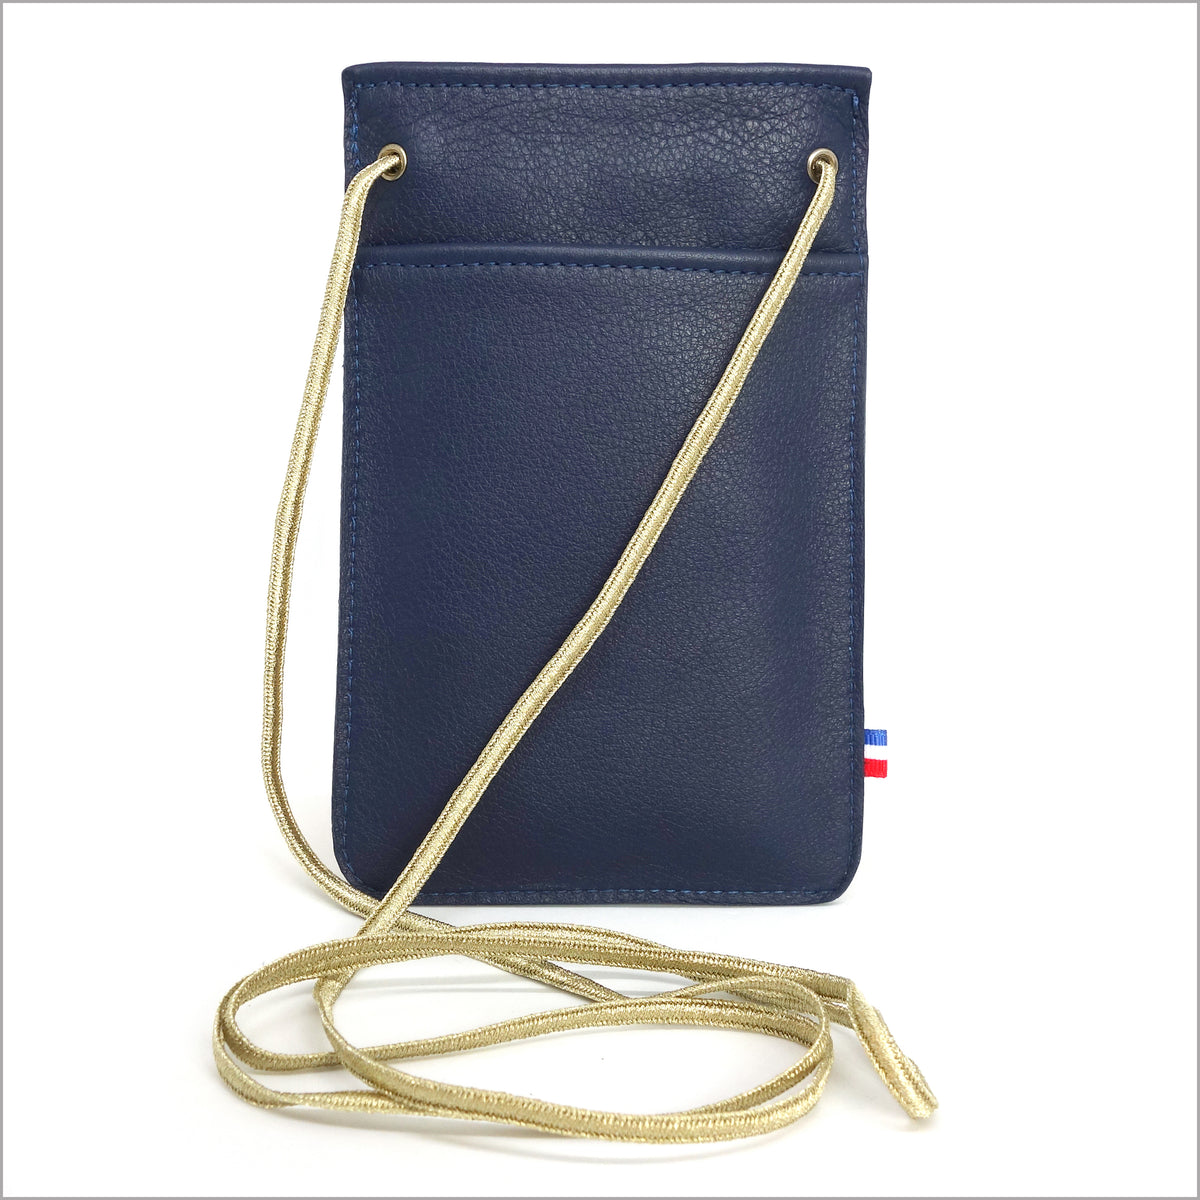 Indigo blue leather smartphone pouch with adjustable shoulder strap